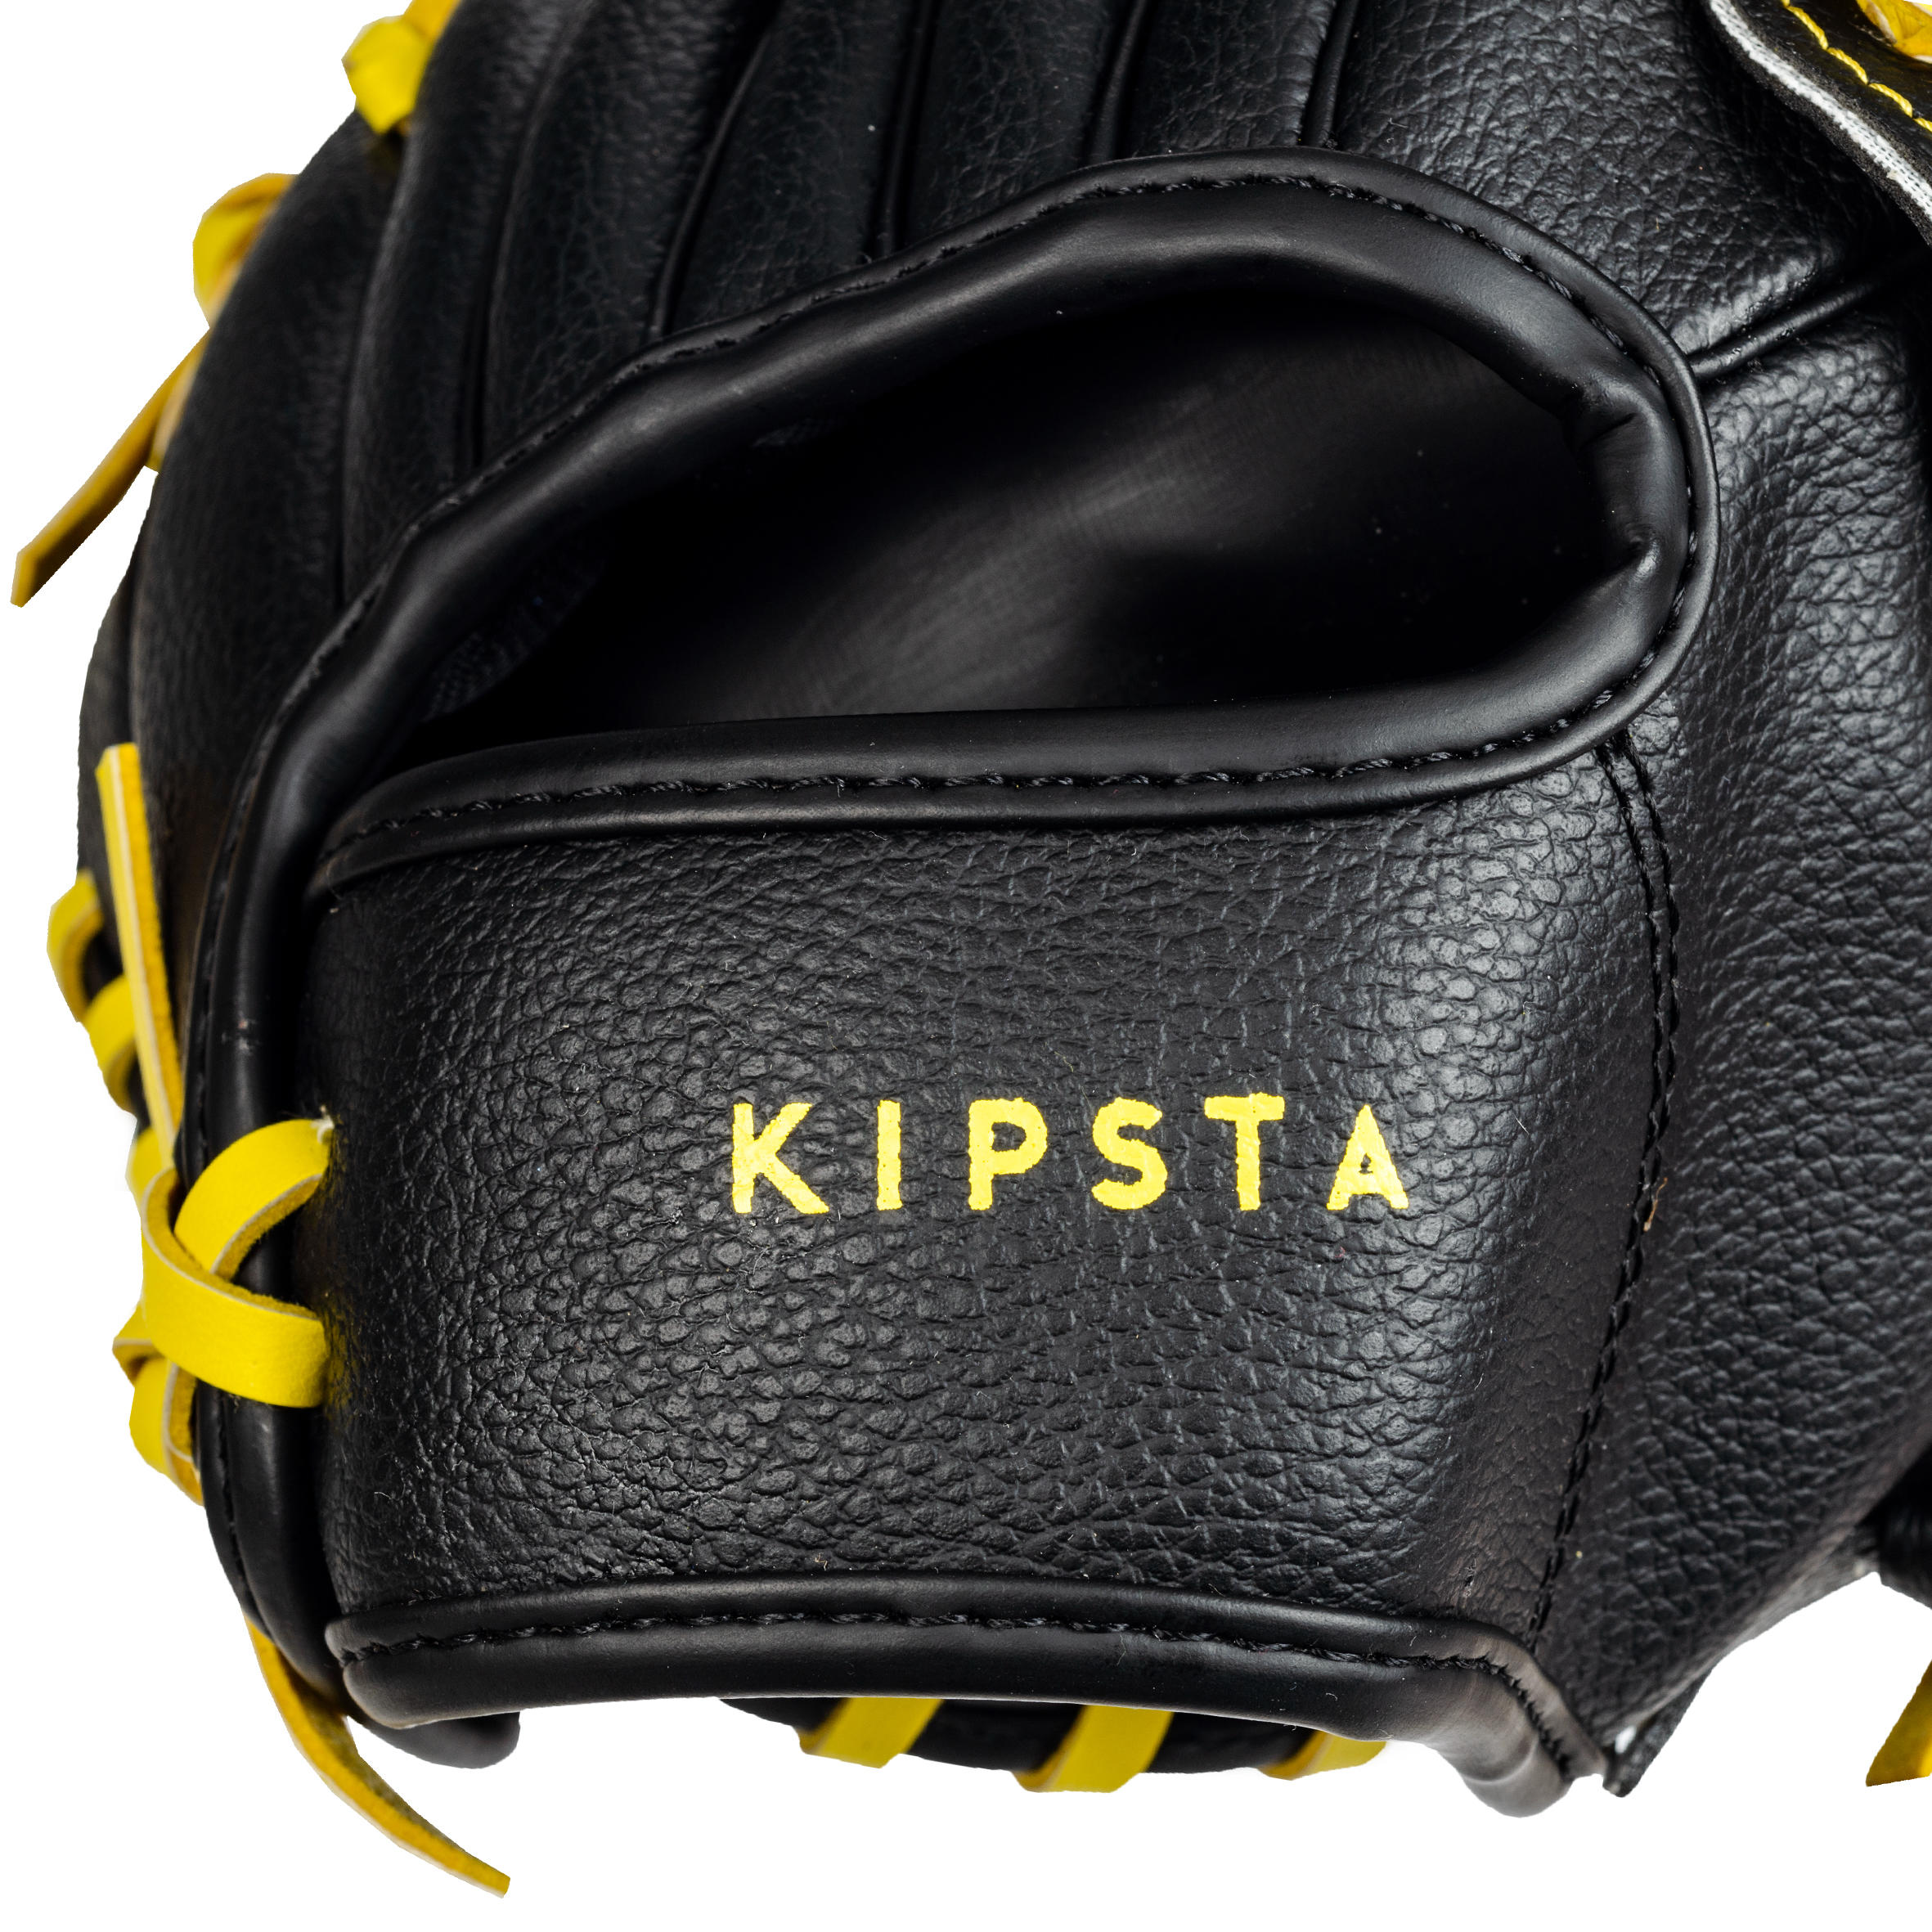 Left-Hand Baseball Glove - BA 100 Black/Yellow - KIPSTA